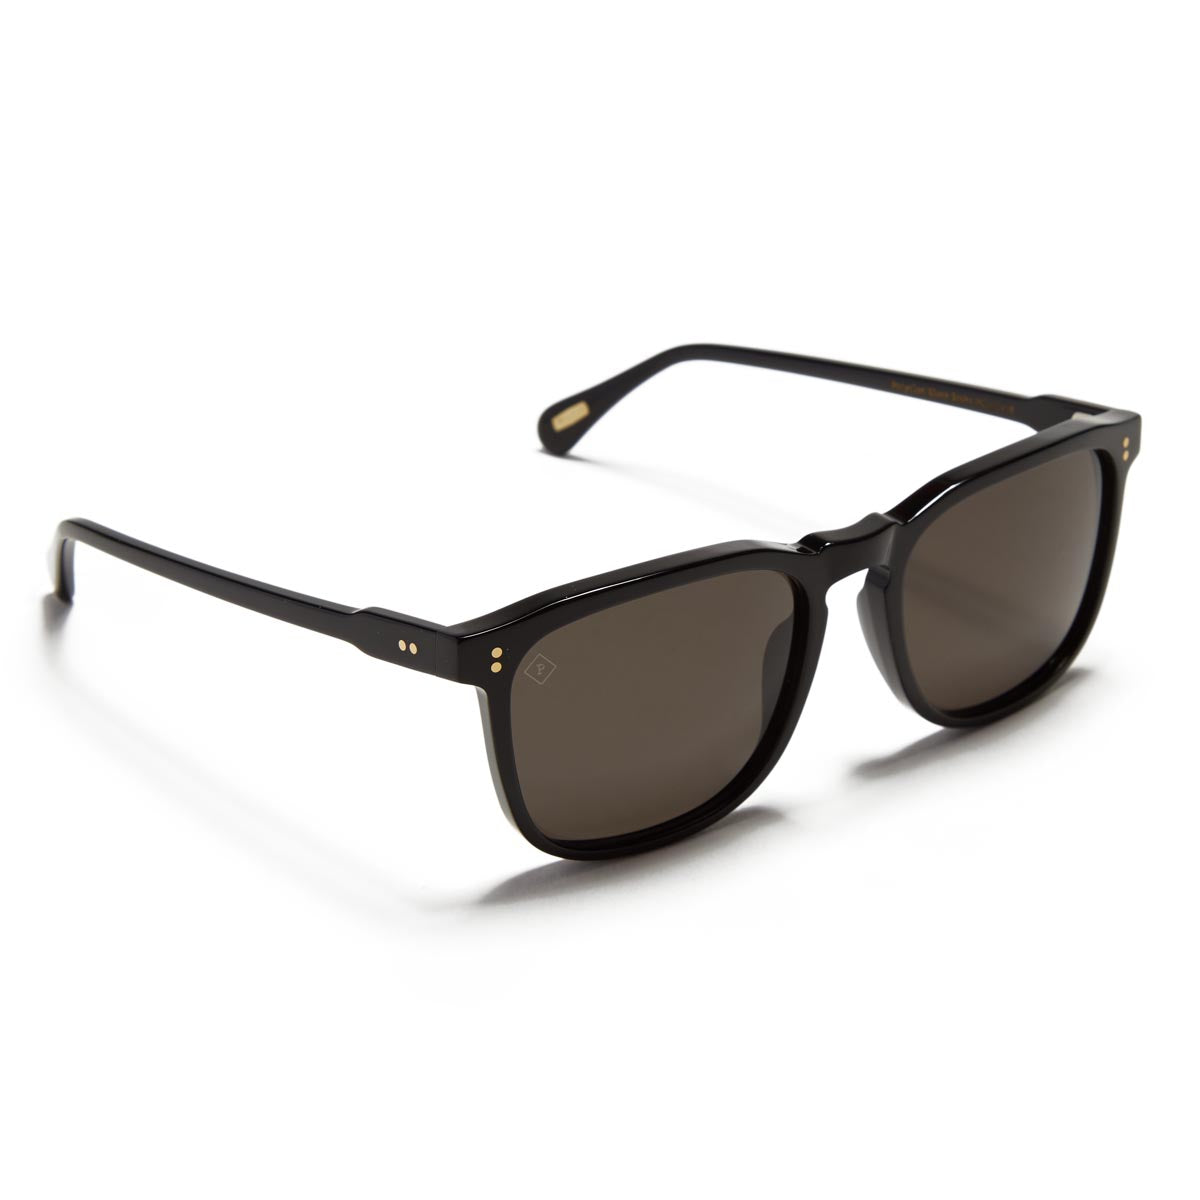 Raen Wiley 54 Sunglasses - Recycled Black/Smoke image 1